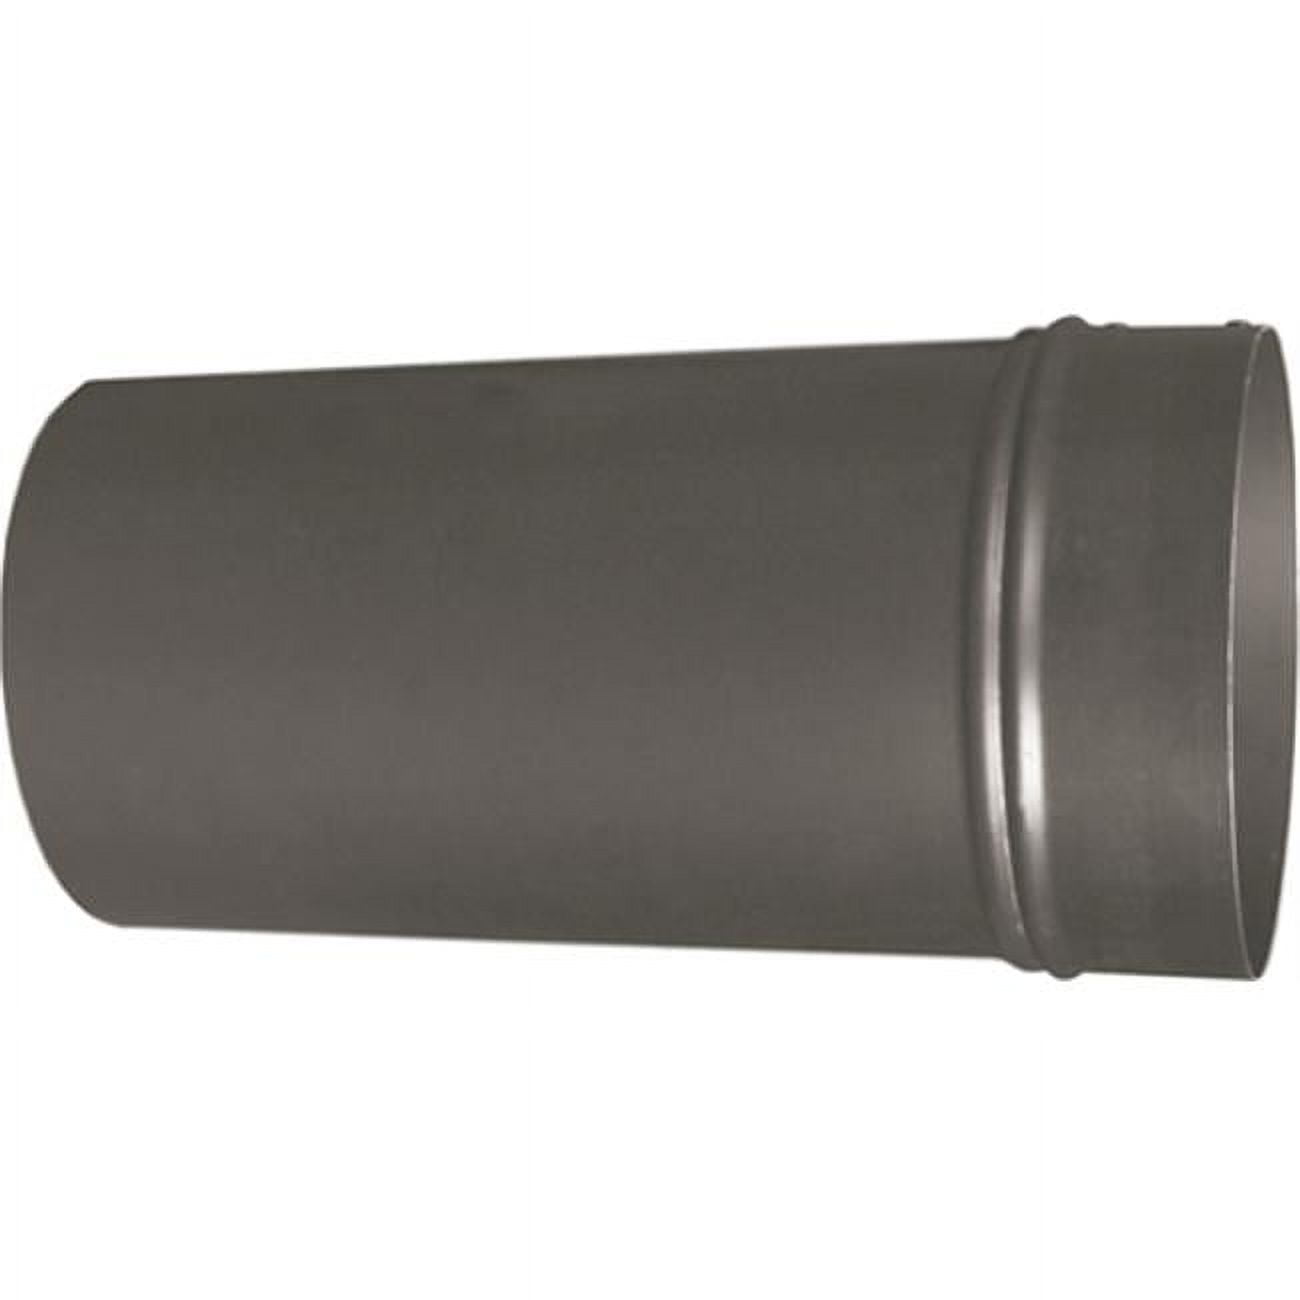 6-607le 6 X 12 In. 24 Gauge Stove Pipe Slip Joint, Black